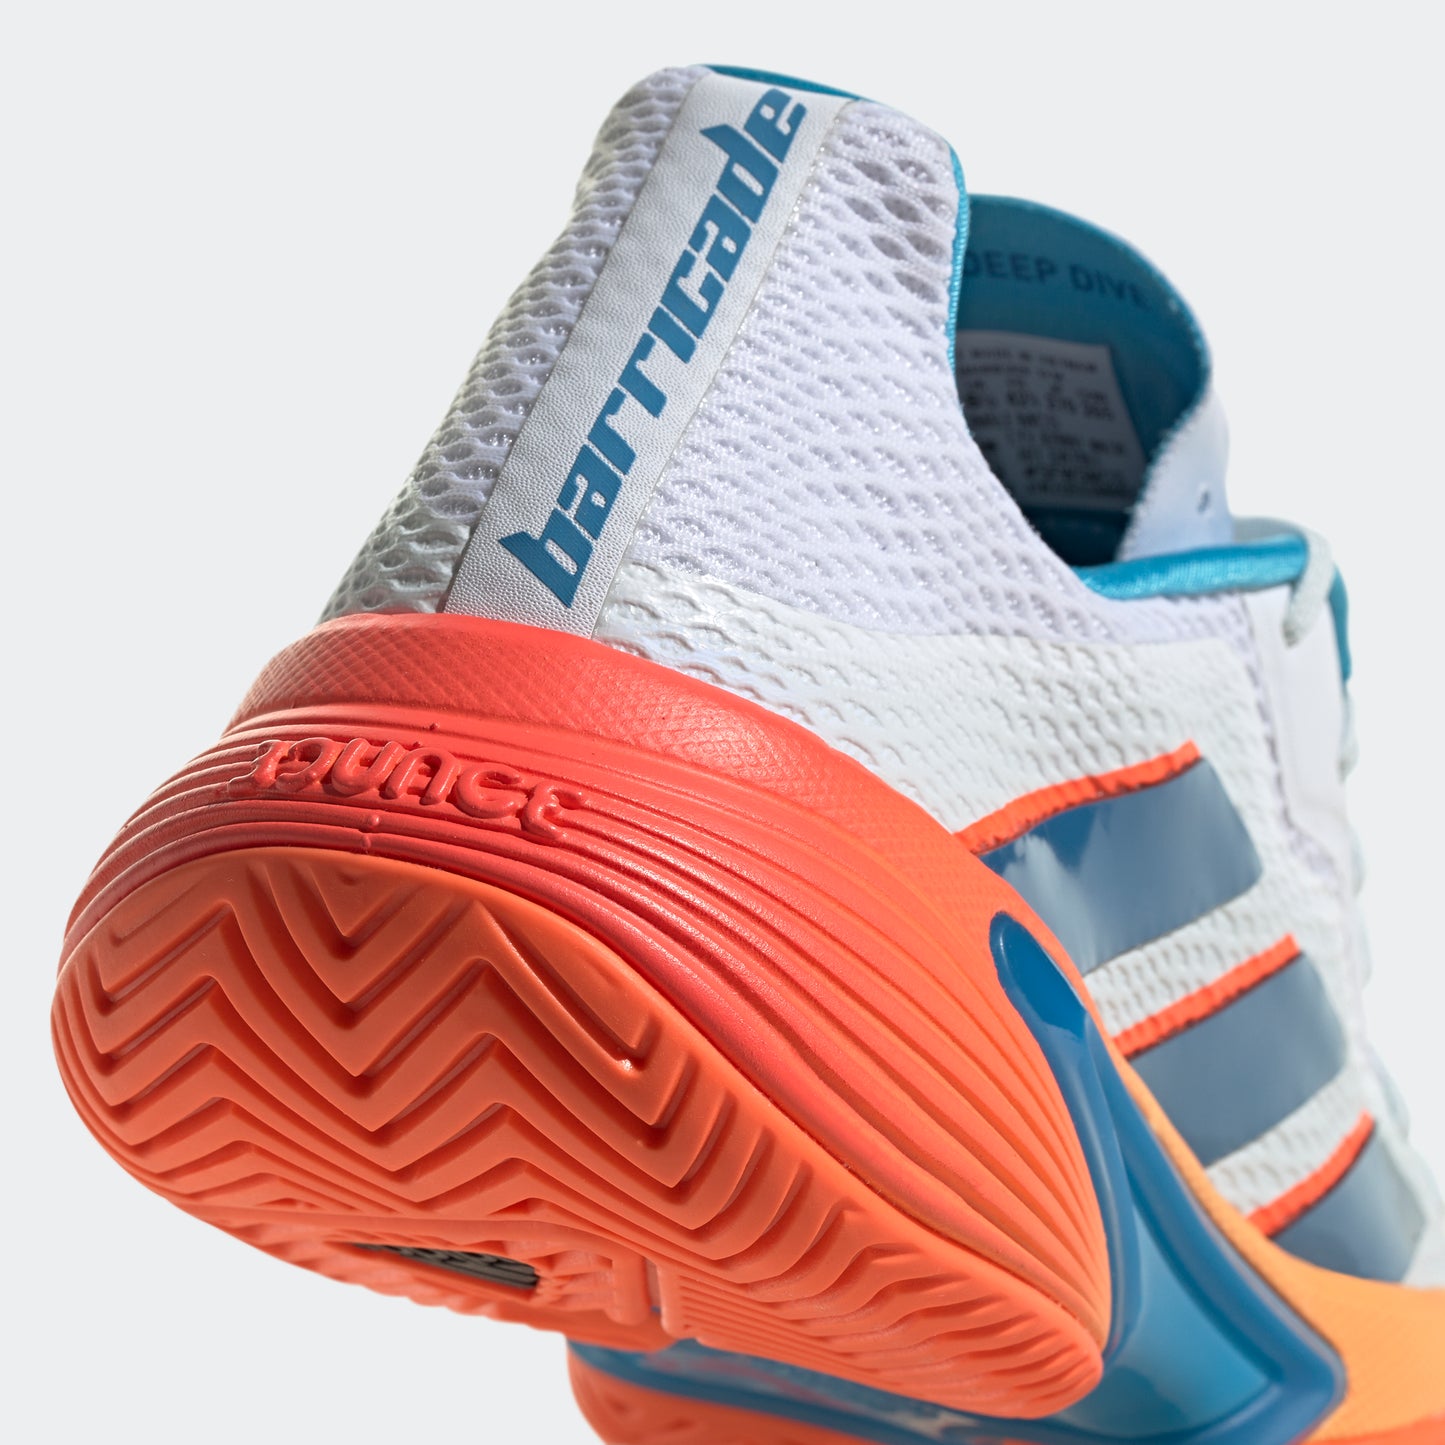 adidas Barricade Tennis Shoes | White/Blue/Orange | Men's